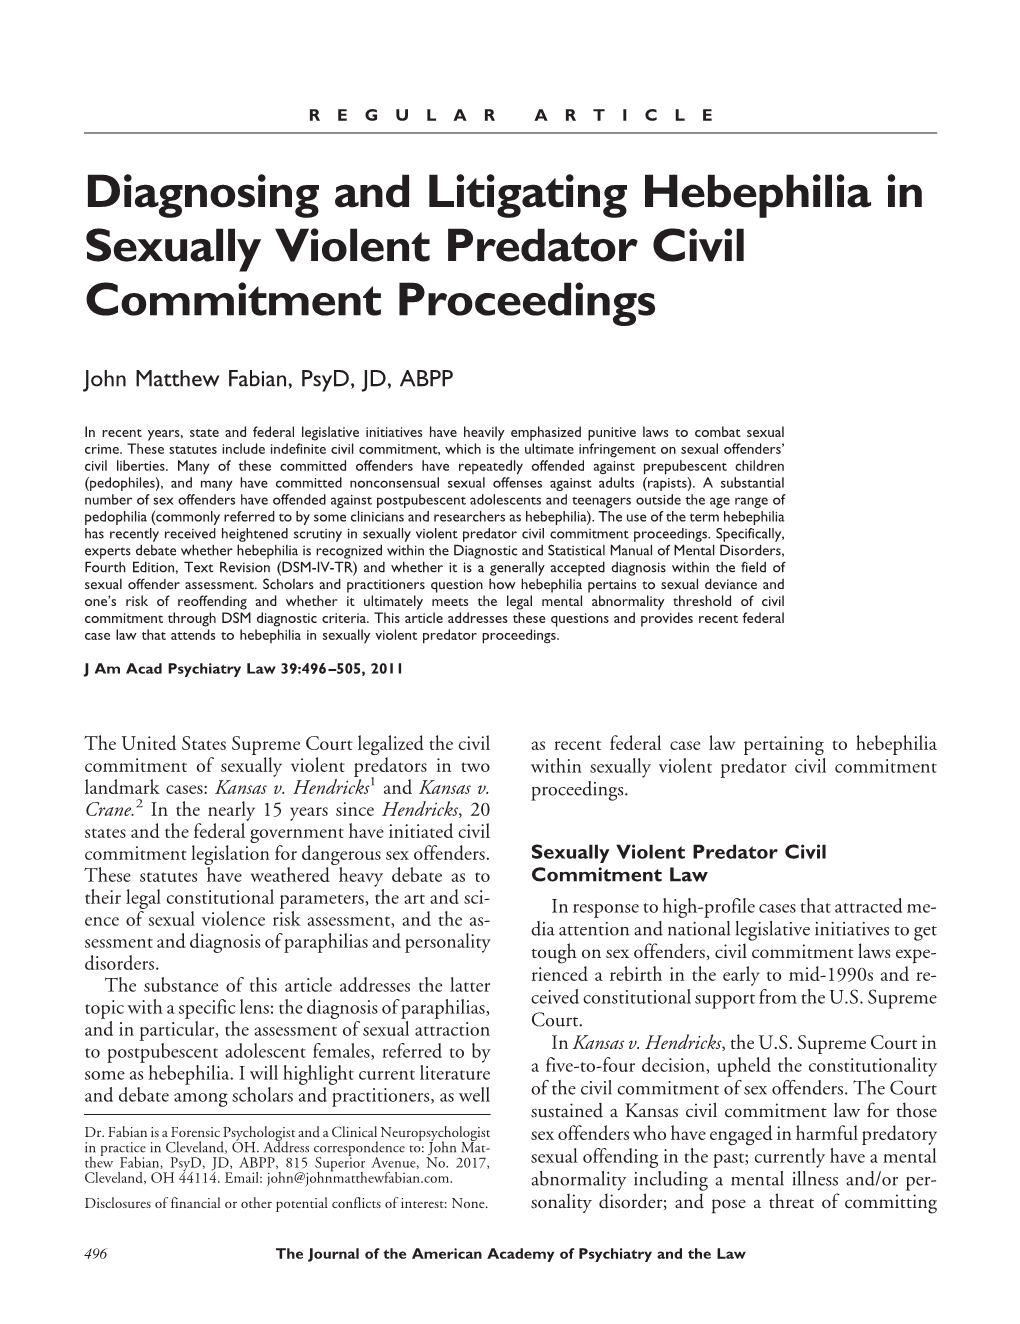 Diagnosing and Litigating Hebephilia in Sexually Violent Predator Civil Commitment Proceedings